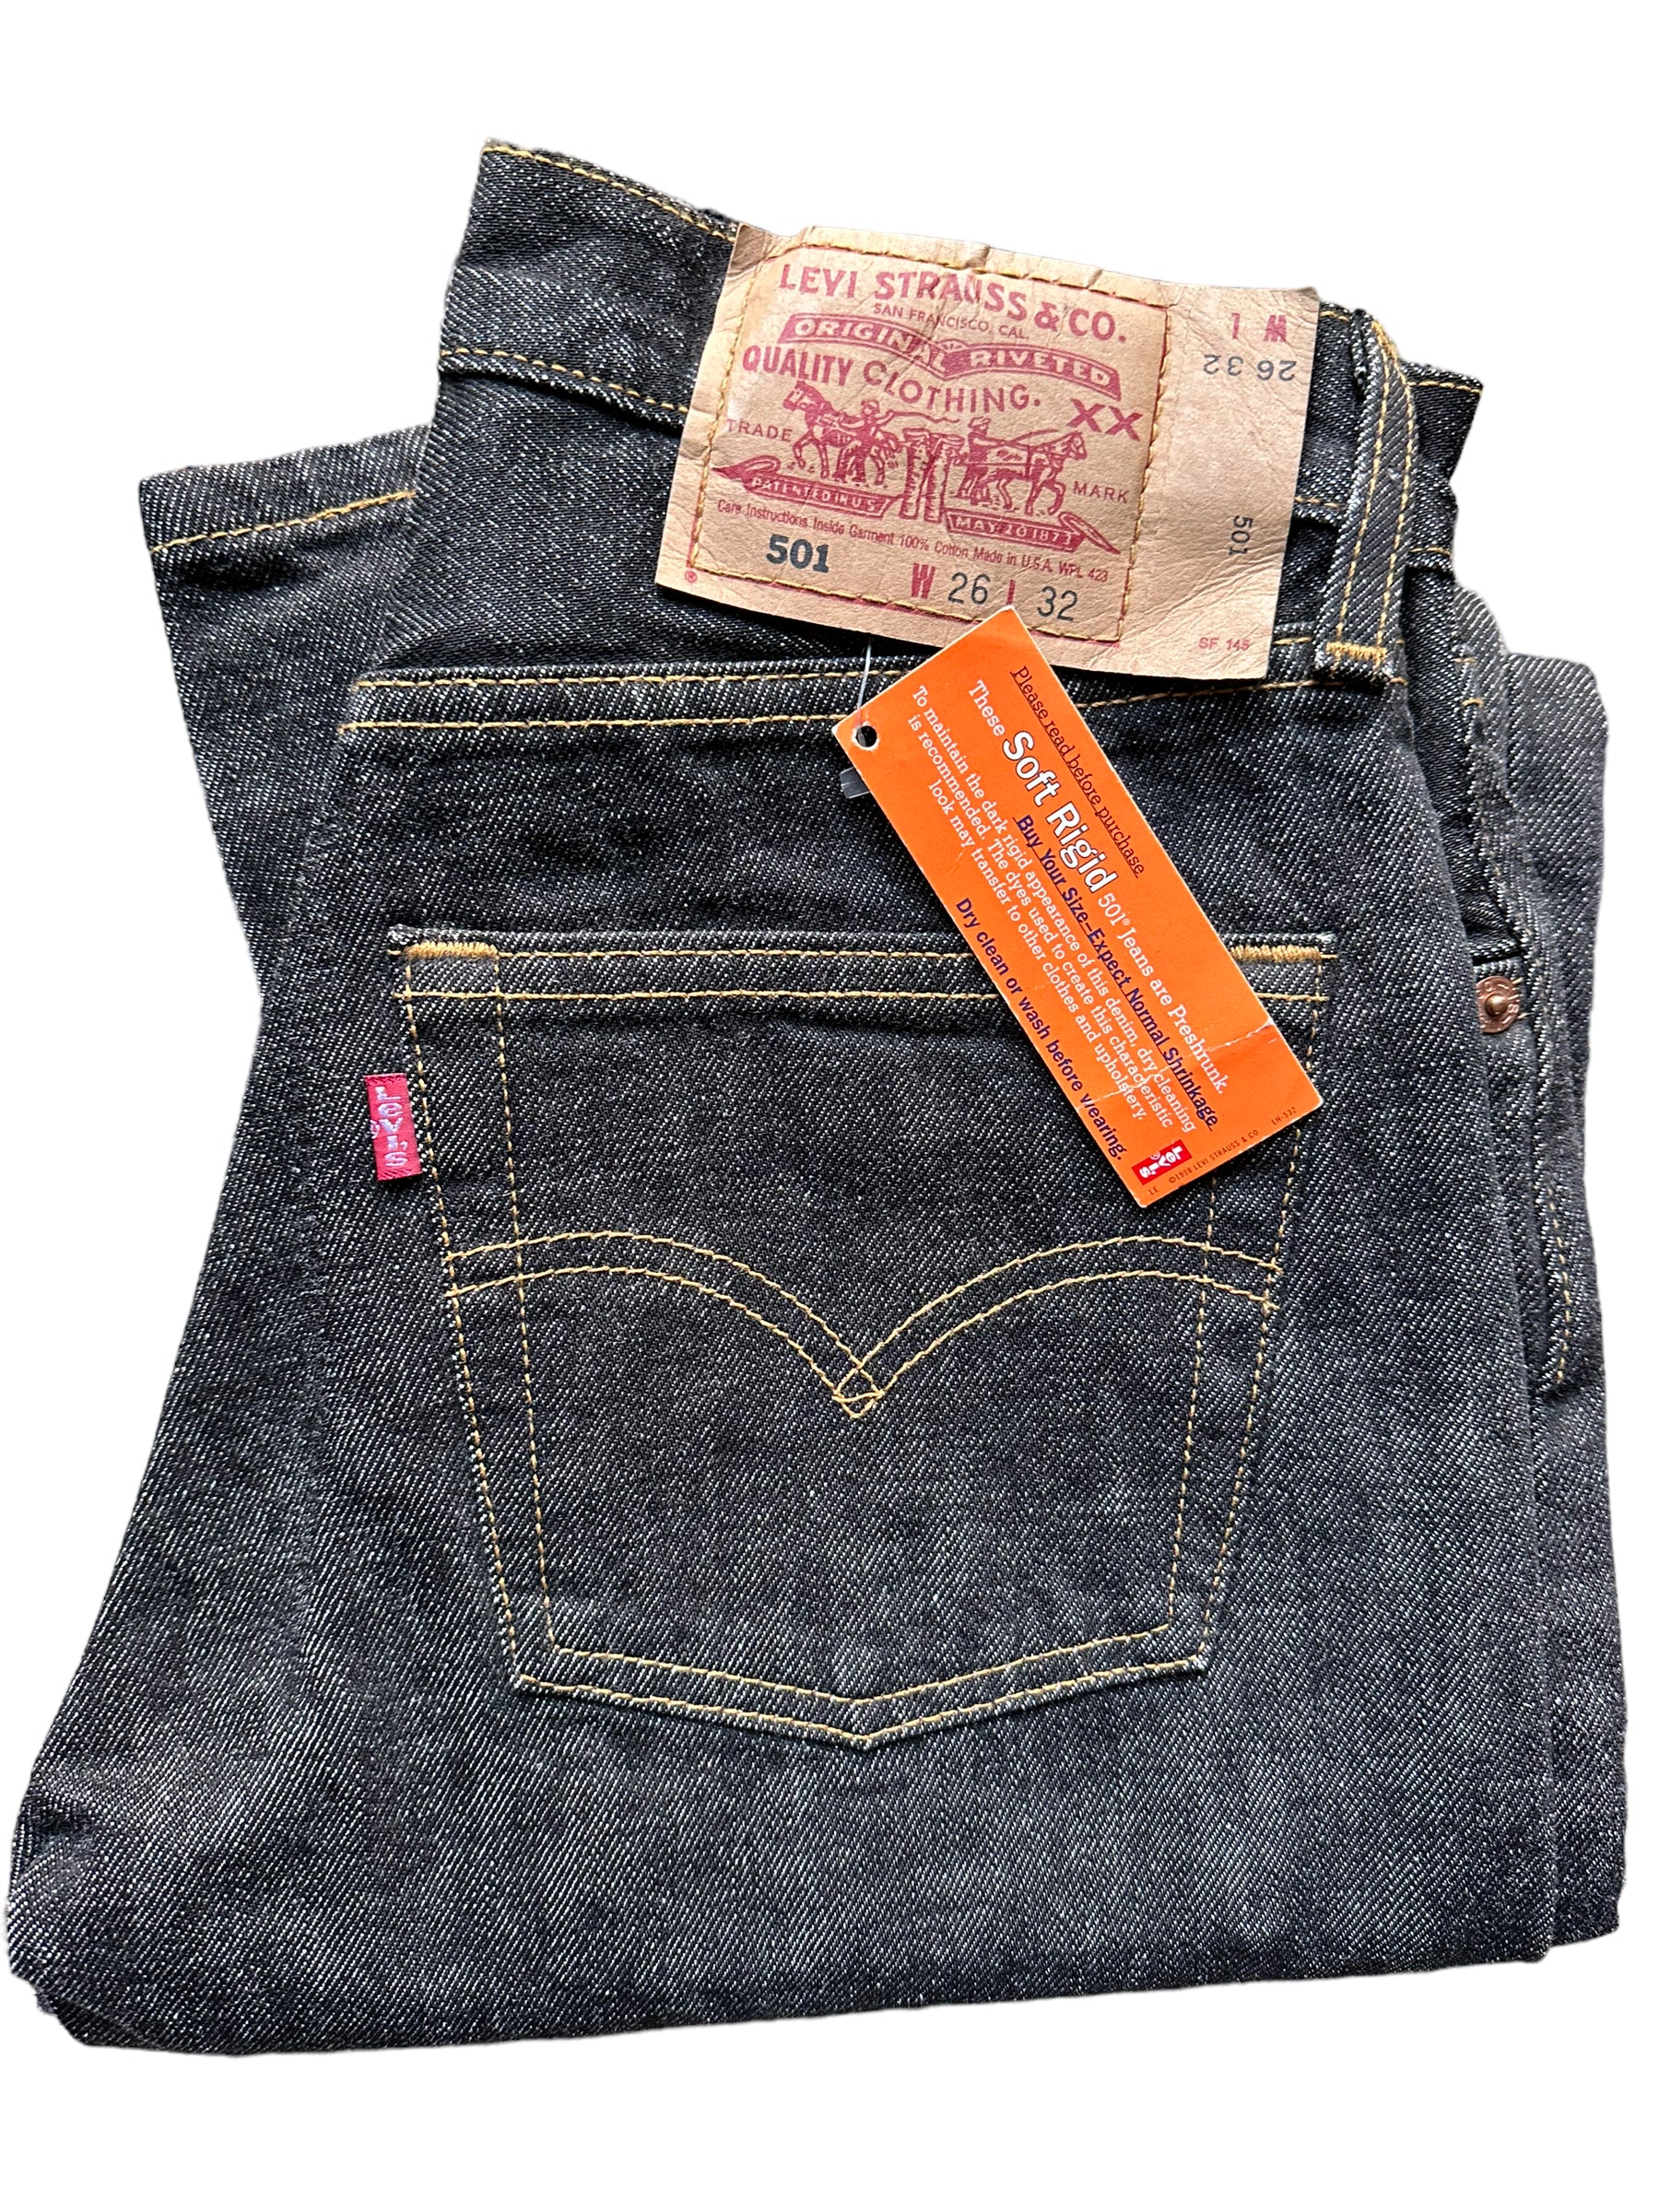 Folded view of Deadstock 90s USA Levi's 501 Black Jeans 26x33 | Seattle Deadstock Vintage Jeans | Barn Owl Vintage Denim